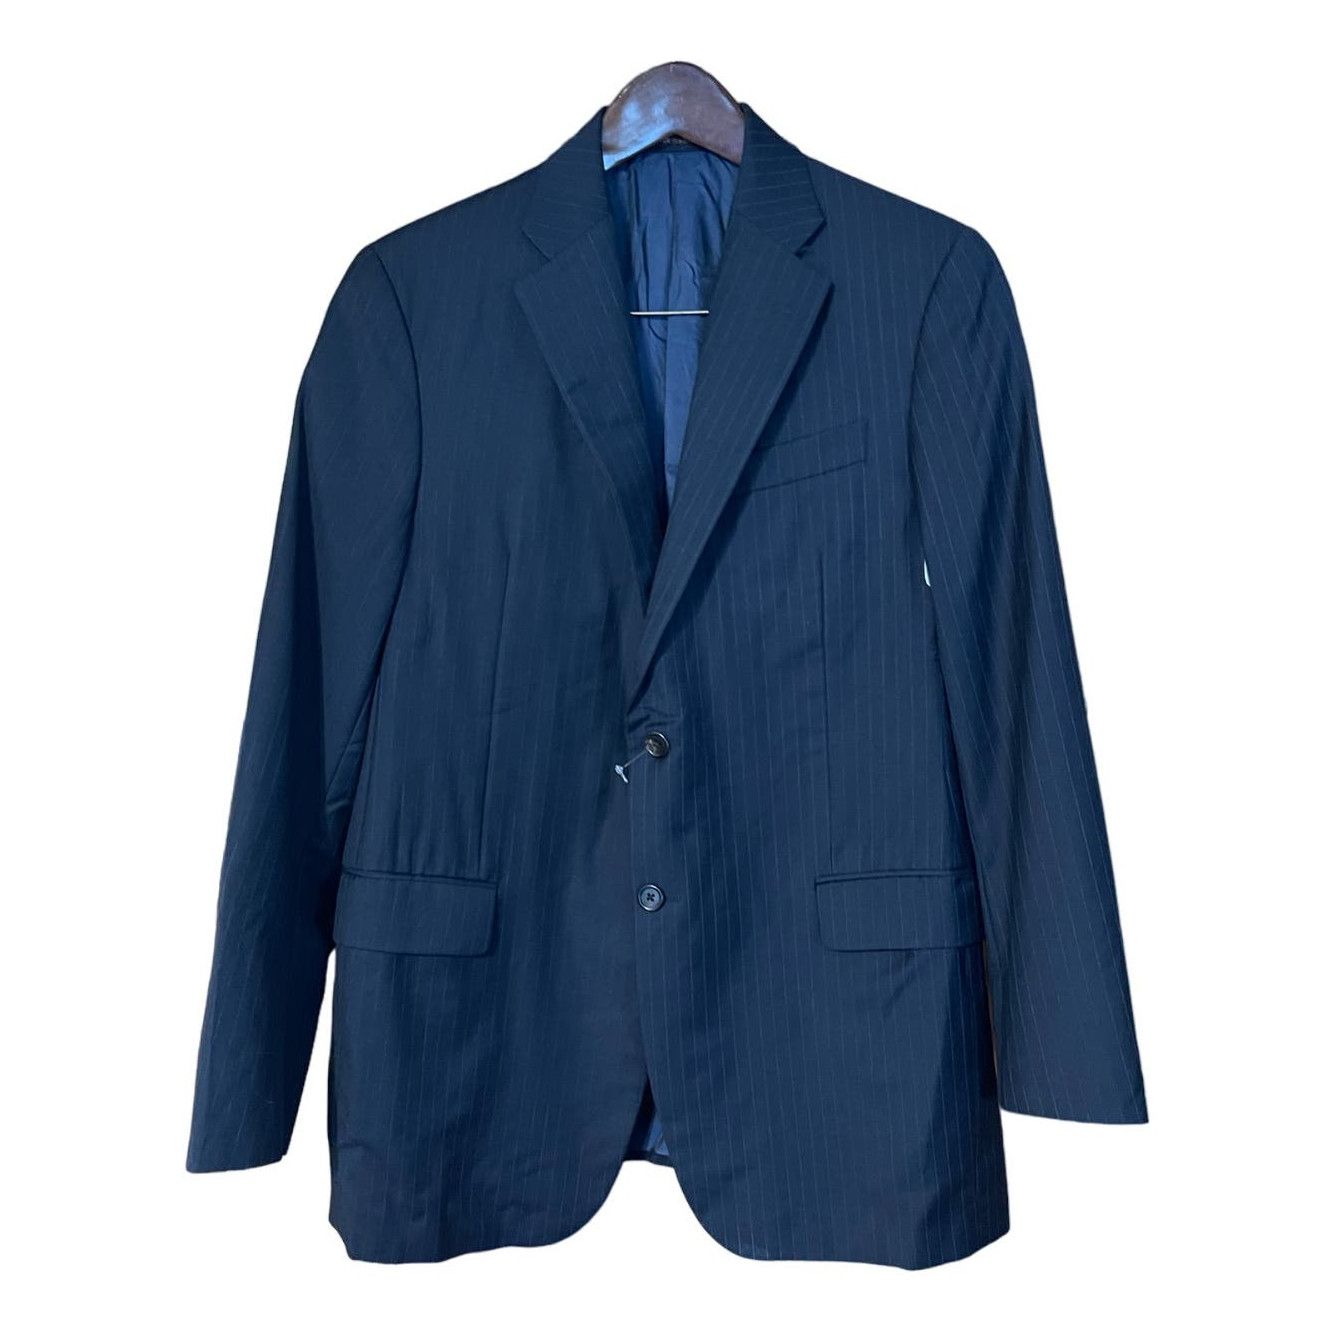 Hickey Freeman Hickey Freeman Mens Blue Pinstripe Sports Jacket Blazer 42R Size 42R - 1 Preview